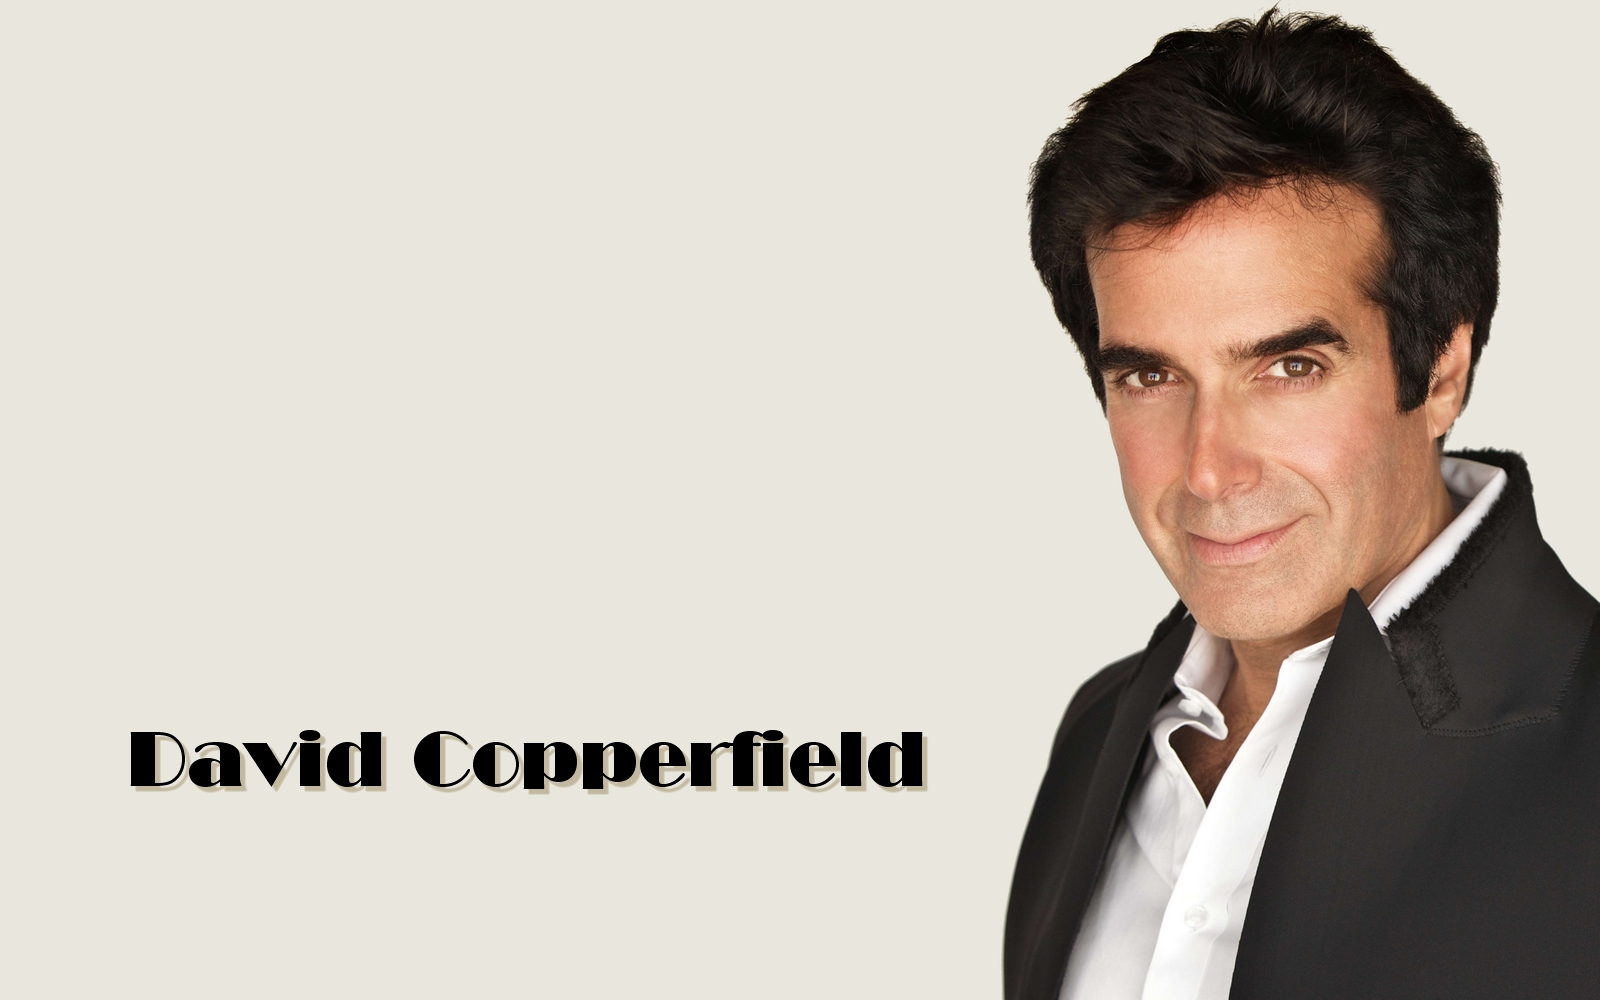 david-copperfield-illusionist-movies